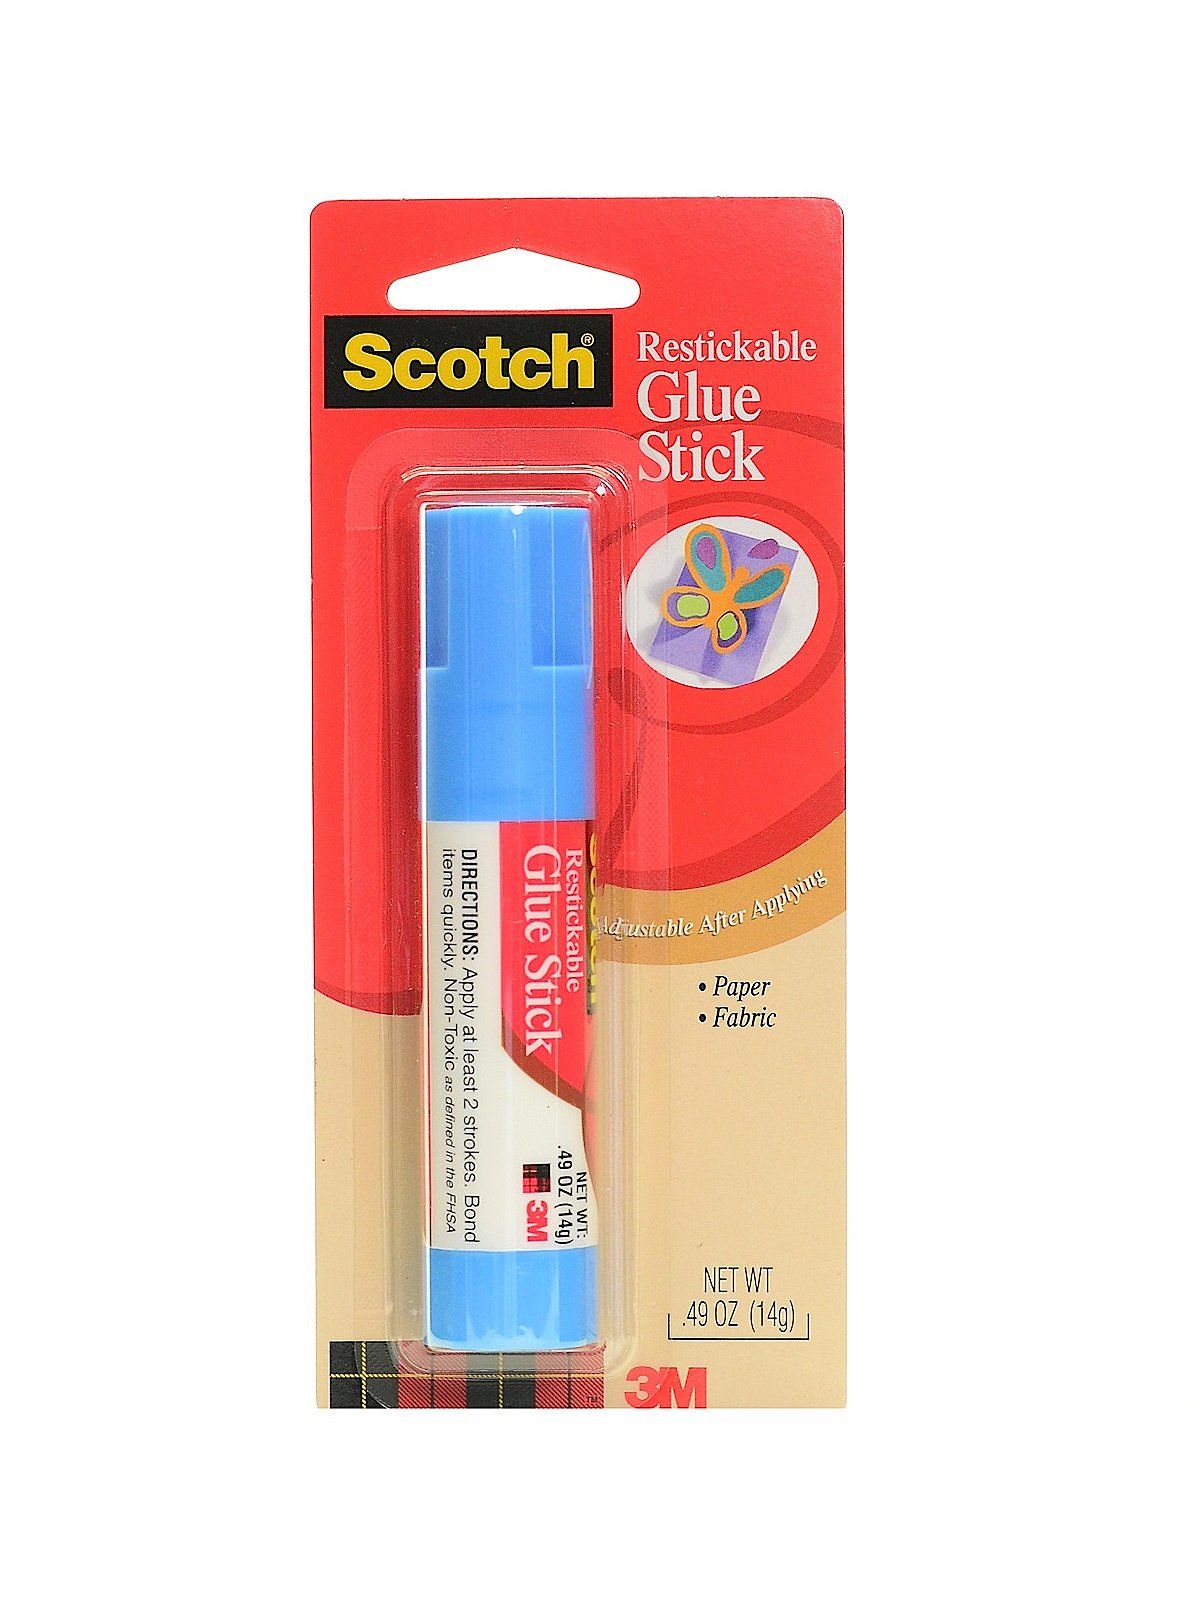 Scotch Restickable Glue Stick — A Brief Review – The Cramped